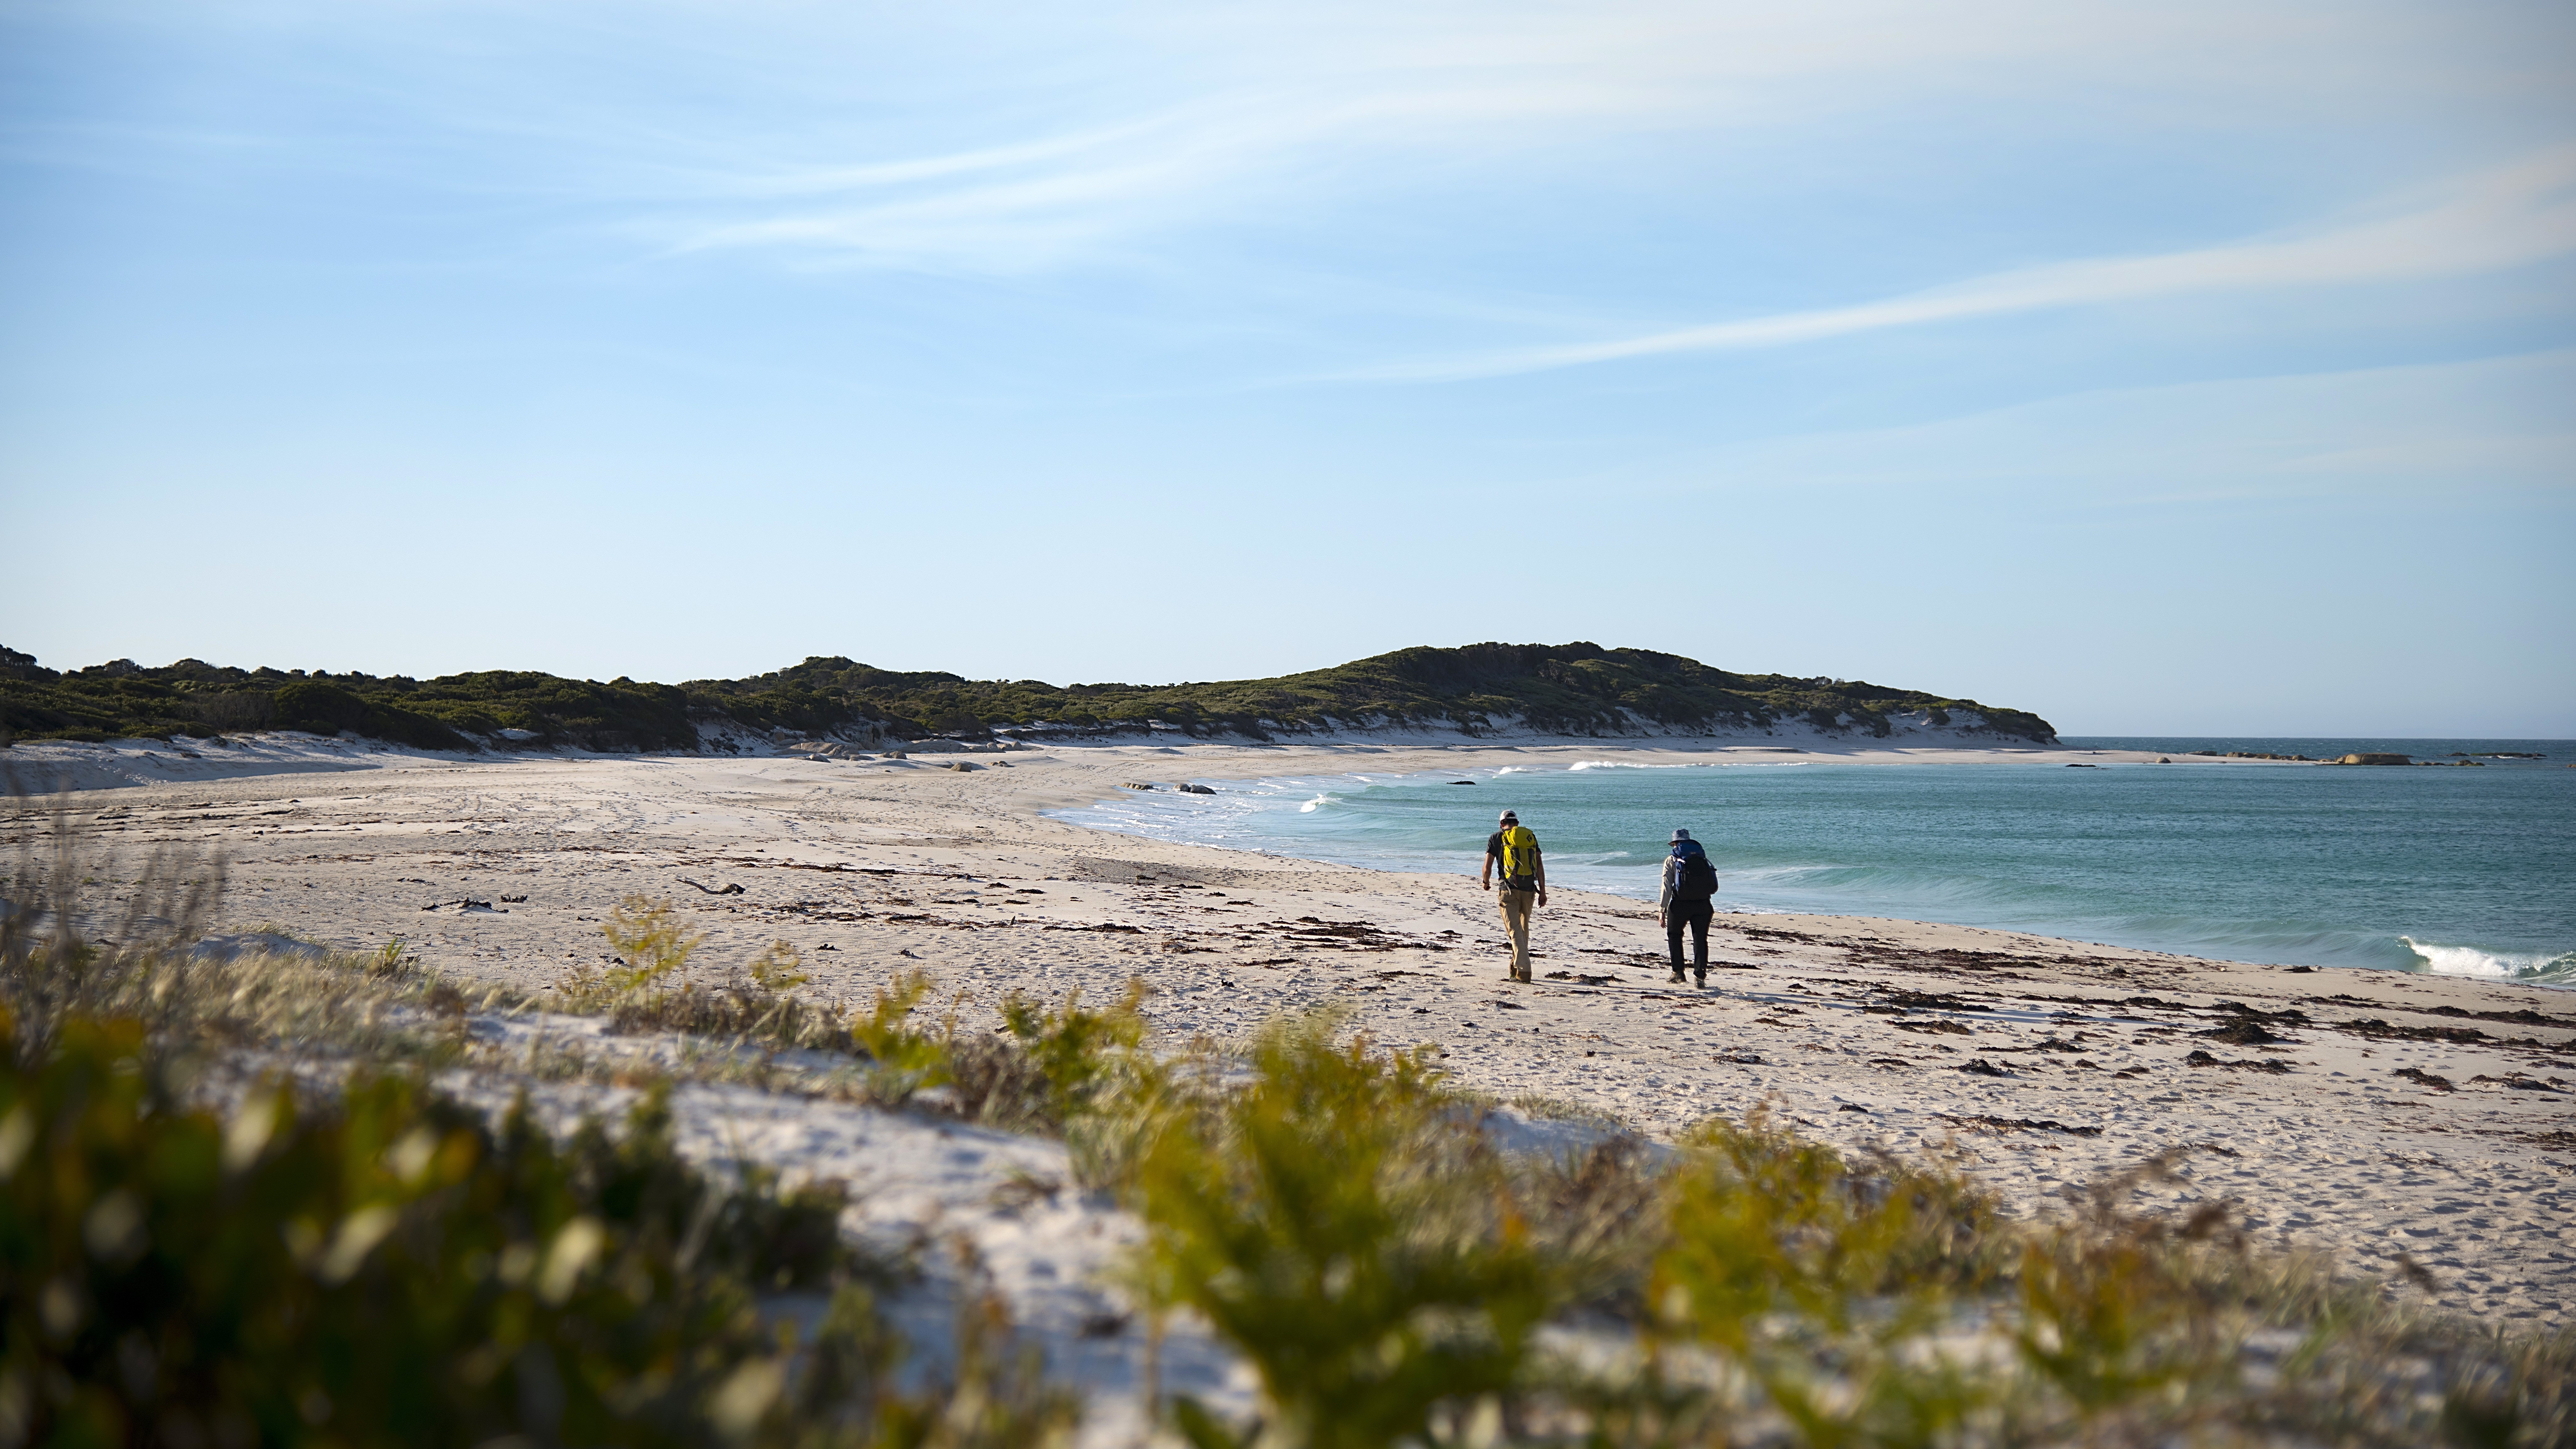 2 people walking on a beach in Tasmania as part of the wukalina Walk hike